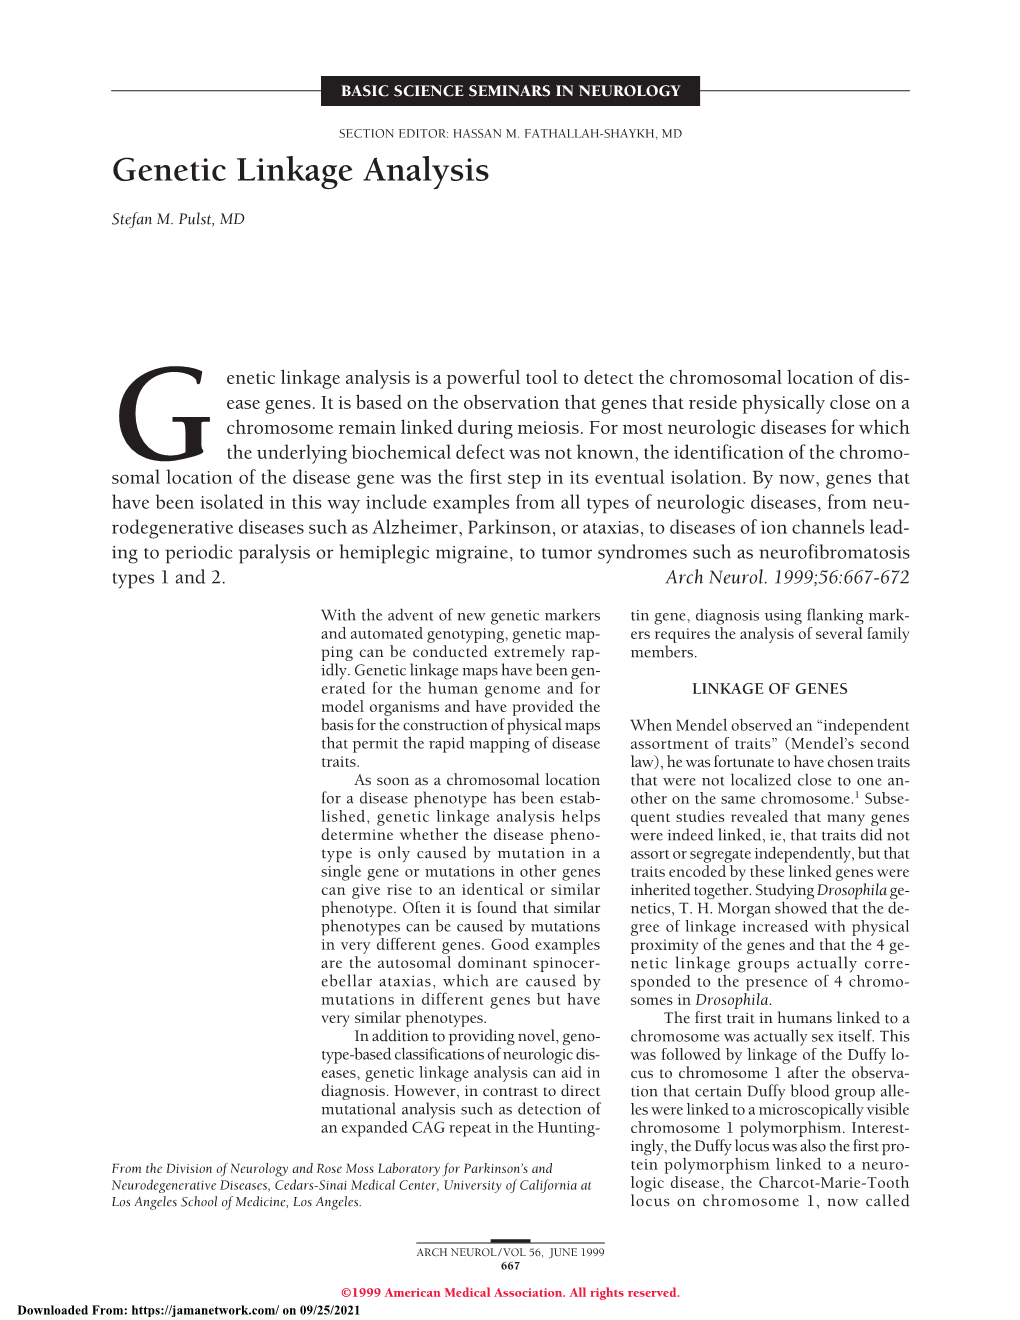 Genetic Linkage Analysis